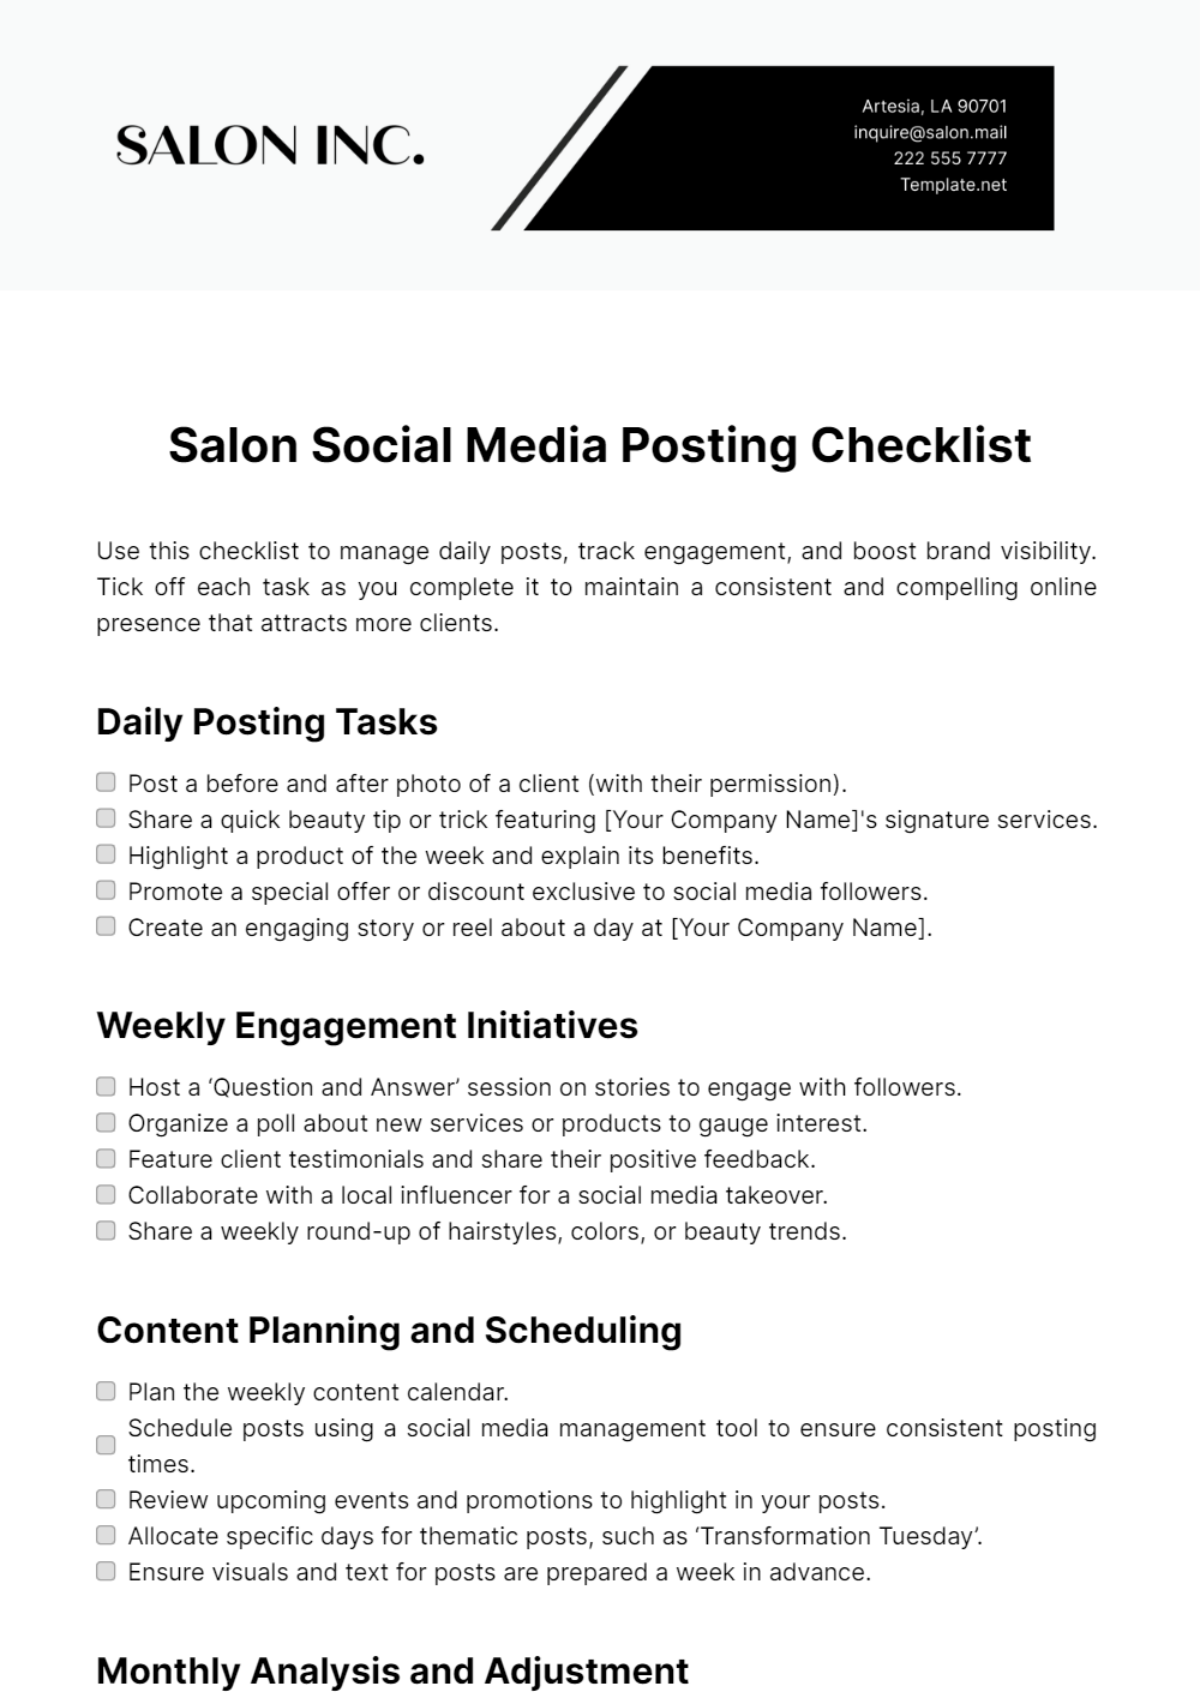 Salon Social Media Posting Checklist Template